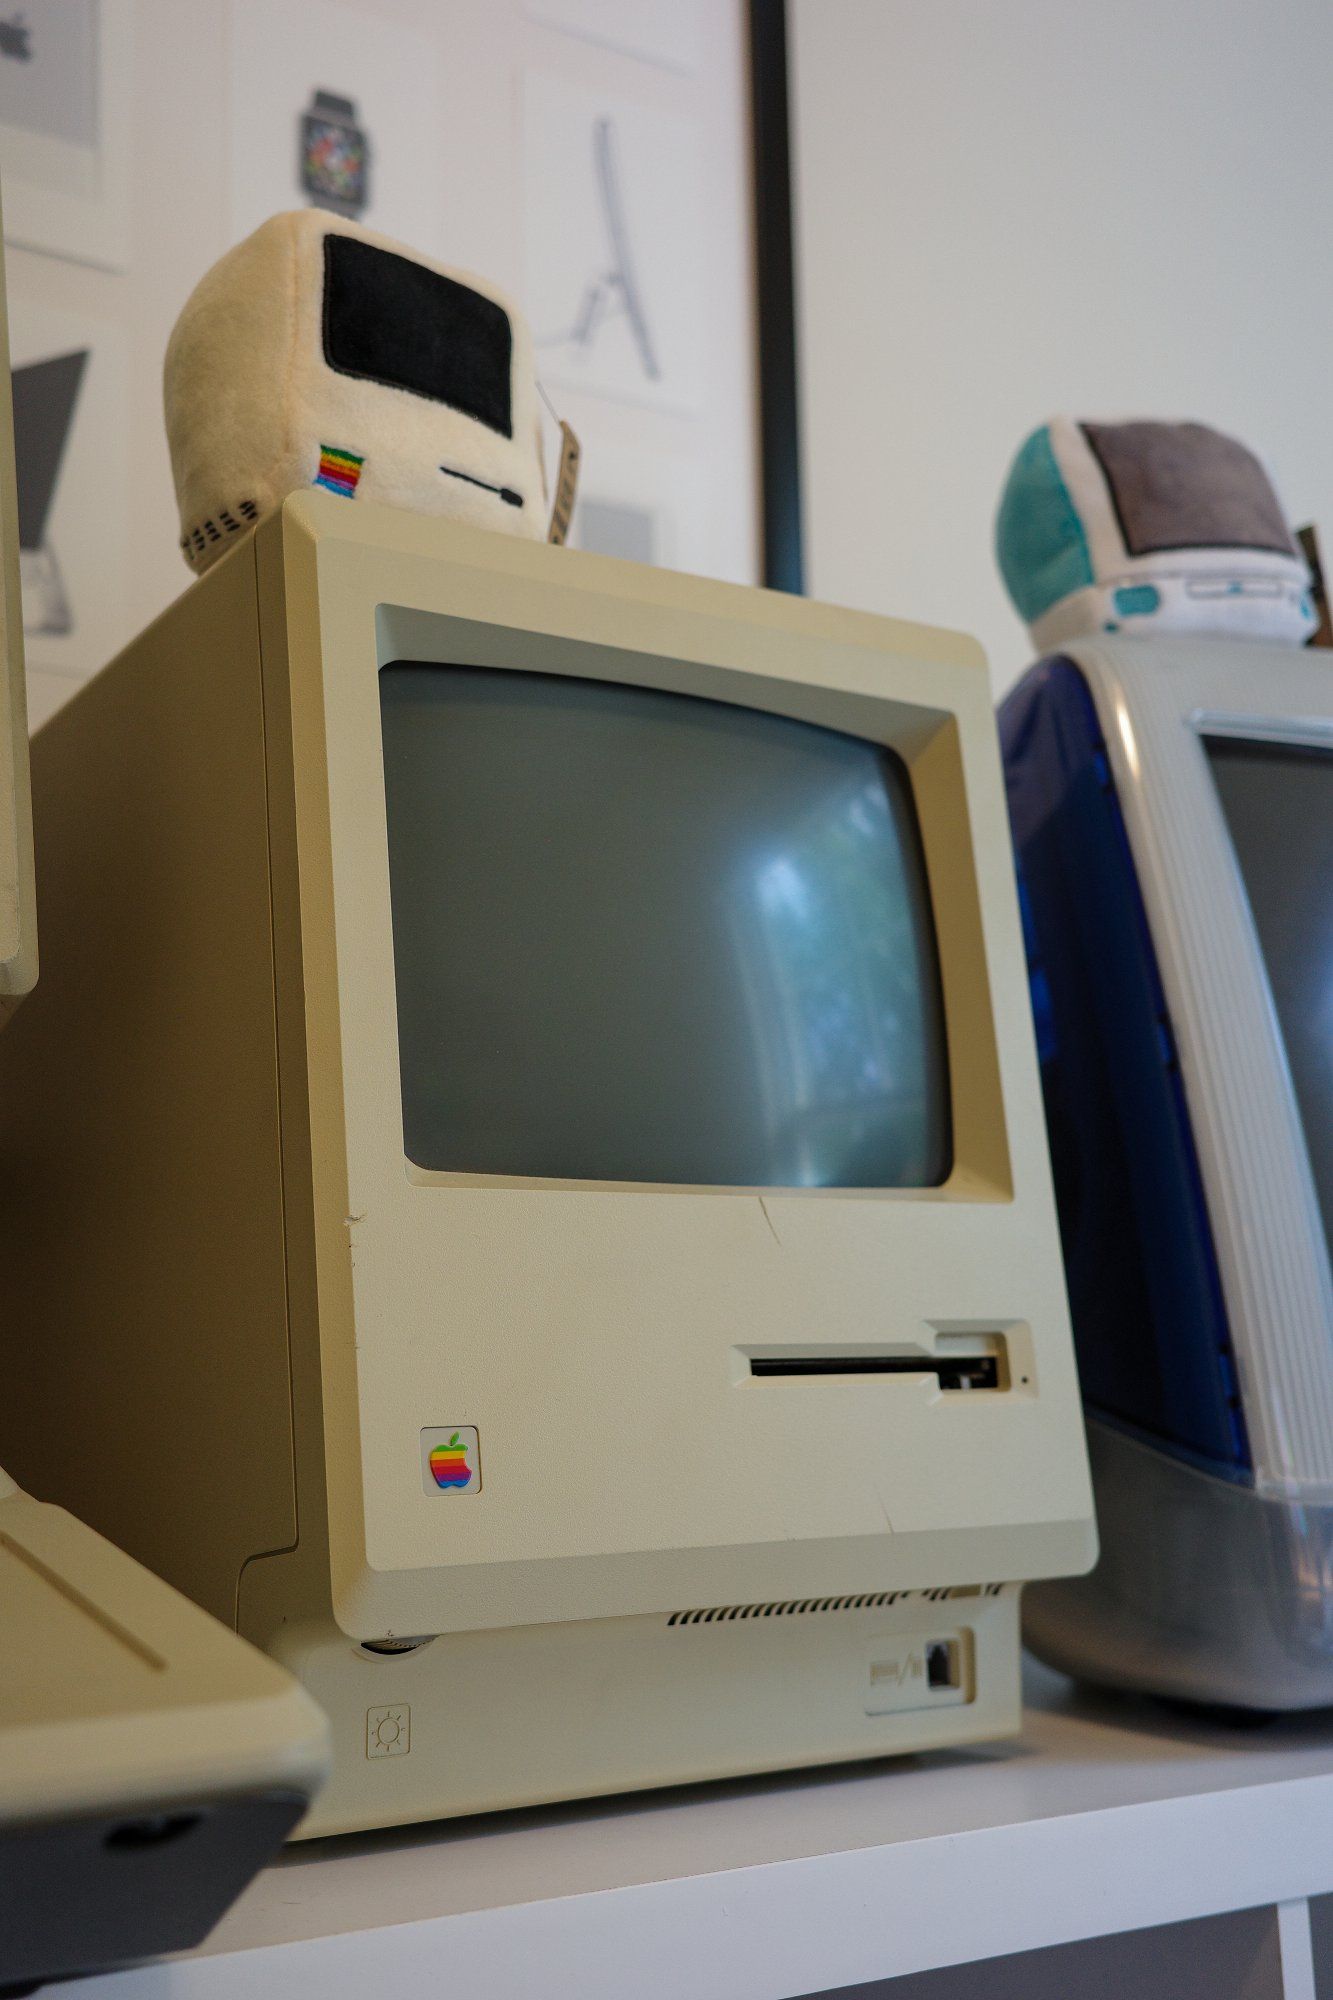 The Macintosh 512K and a couple of small plush toys shaped like classic Macintosh computers